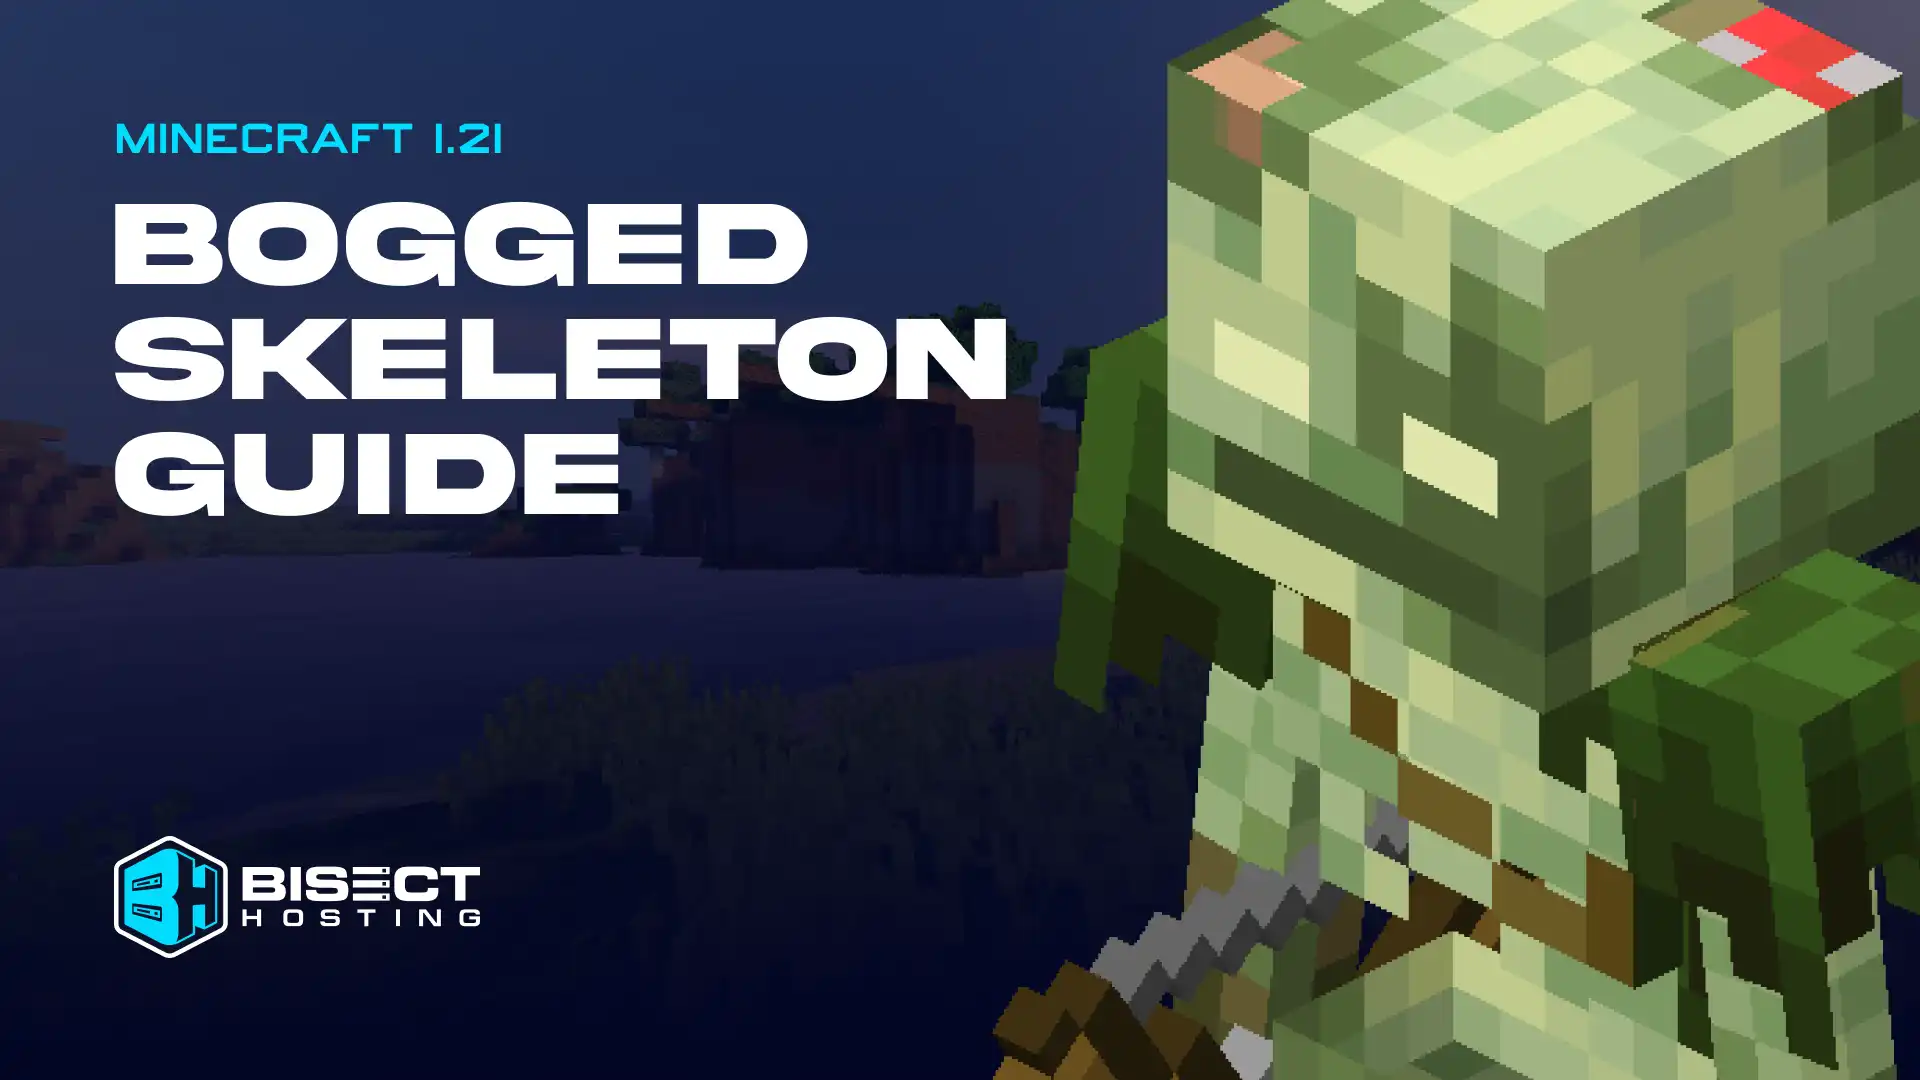 Minecraft 1.21 Bogged Skeleton Guide